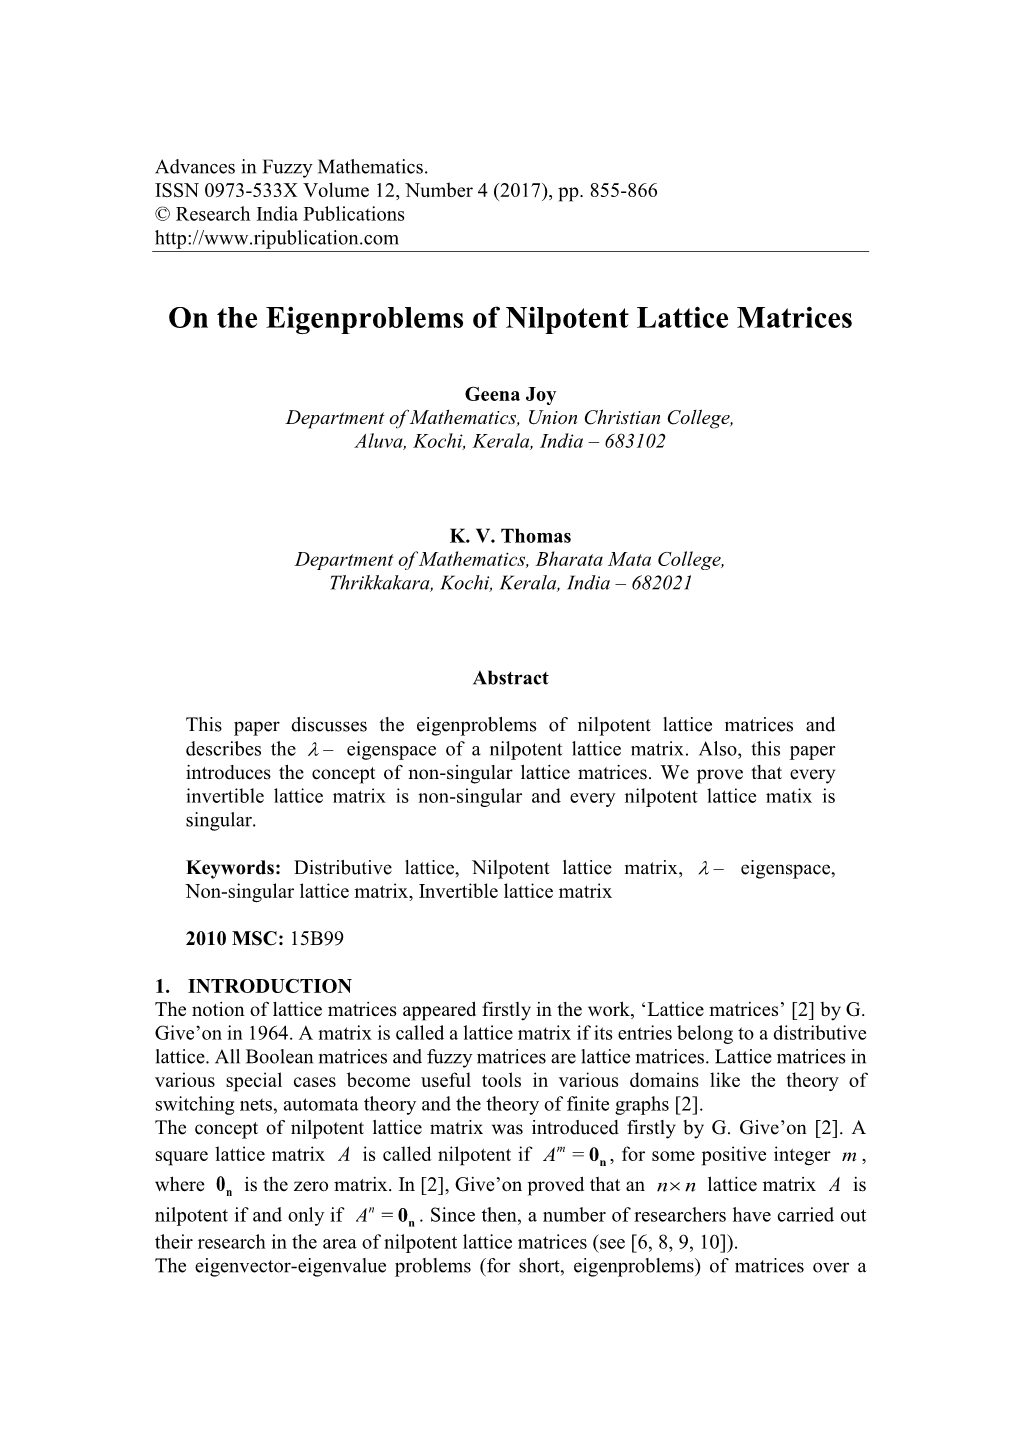 On the Eigenproblems of Nilpotent Lattice Matrices